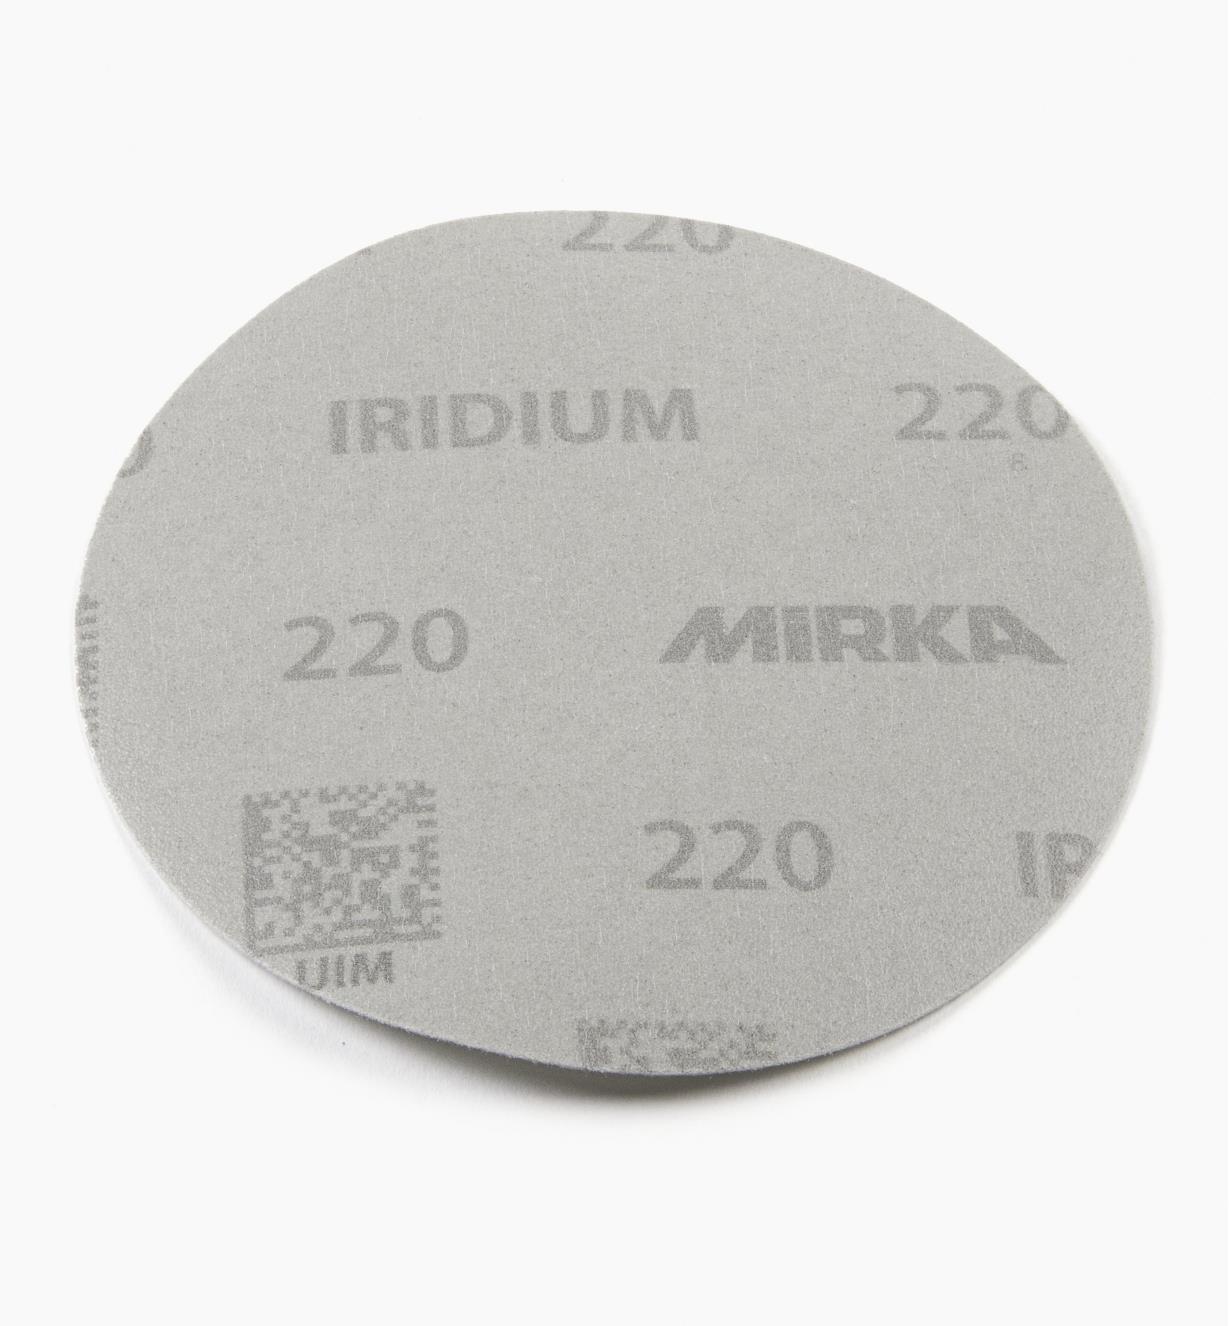 08K0946 - 220x 5" No-Hole Iridium Grip Disc, ea.